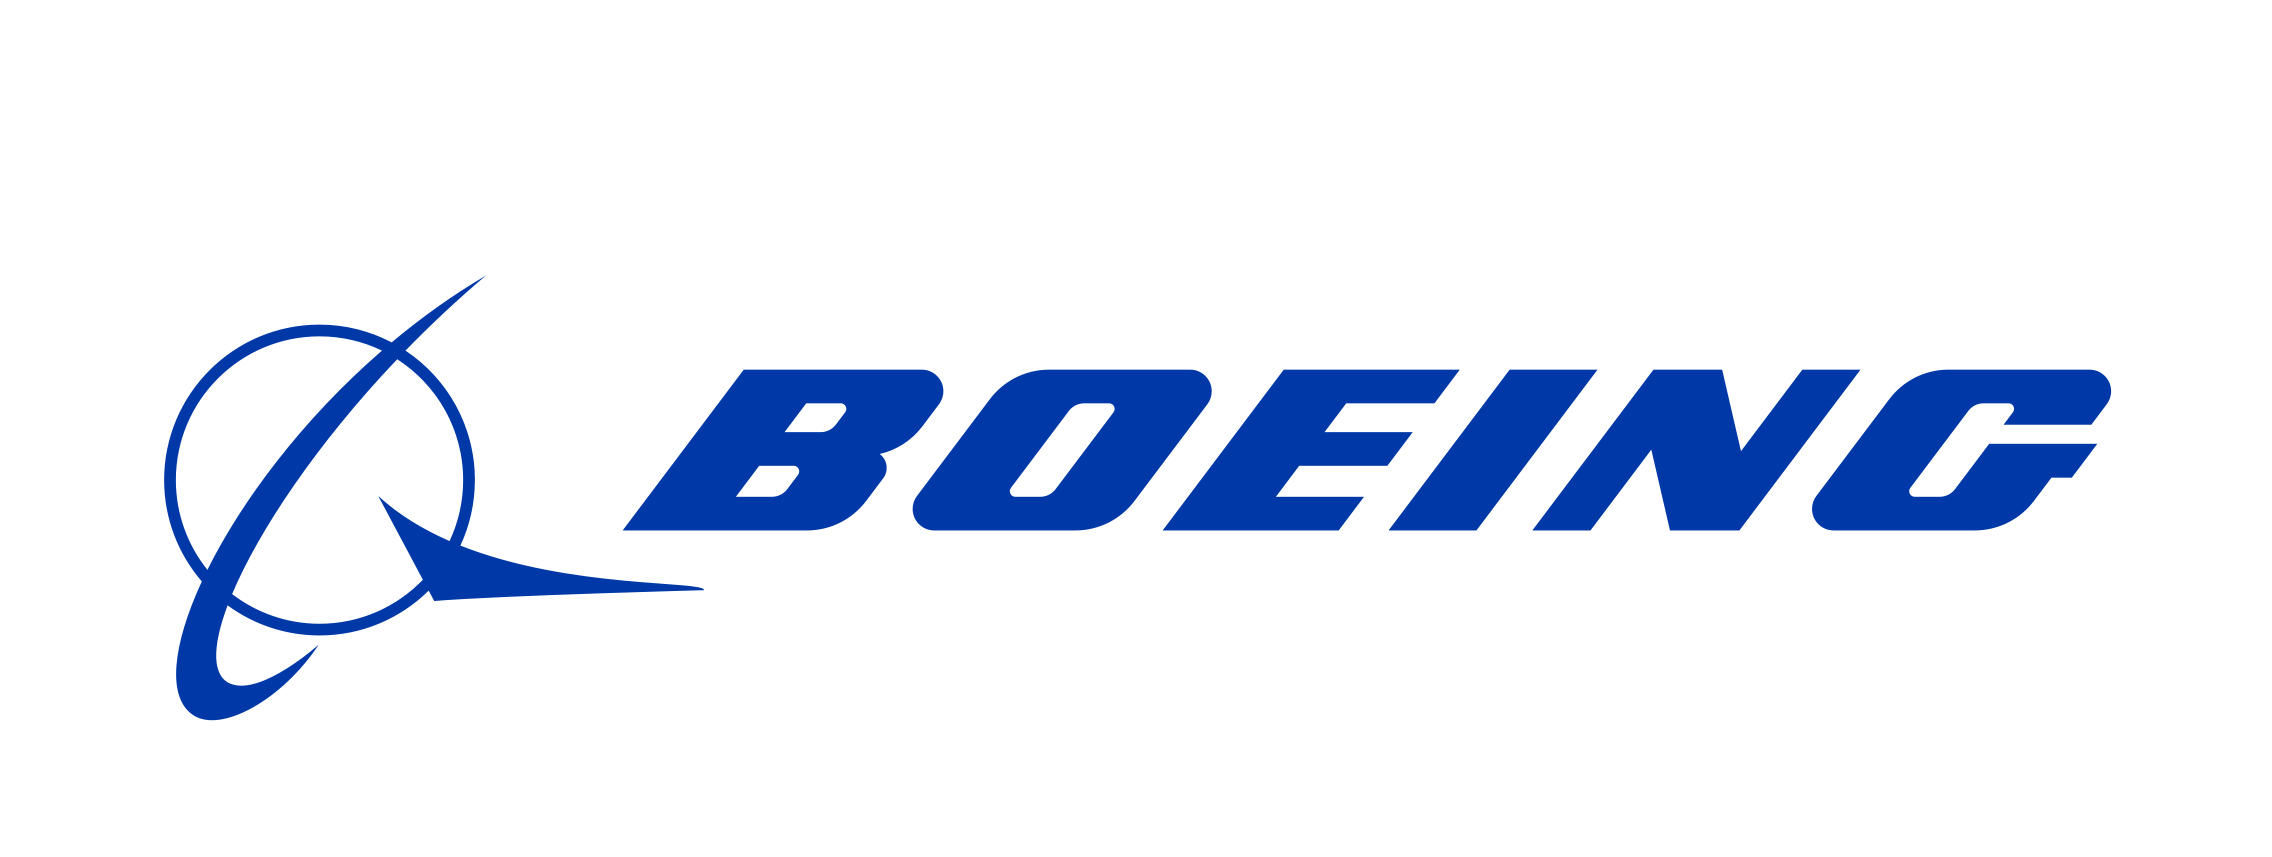 Boeing Wave Analysis – 1 February, 2022